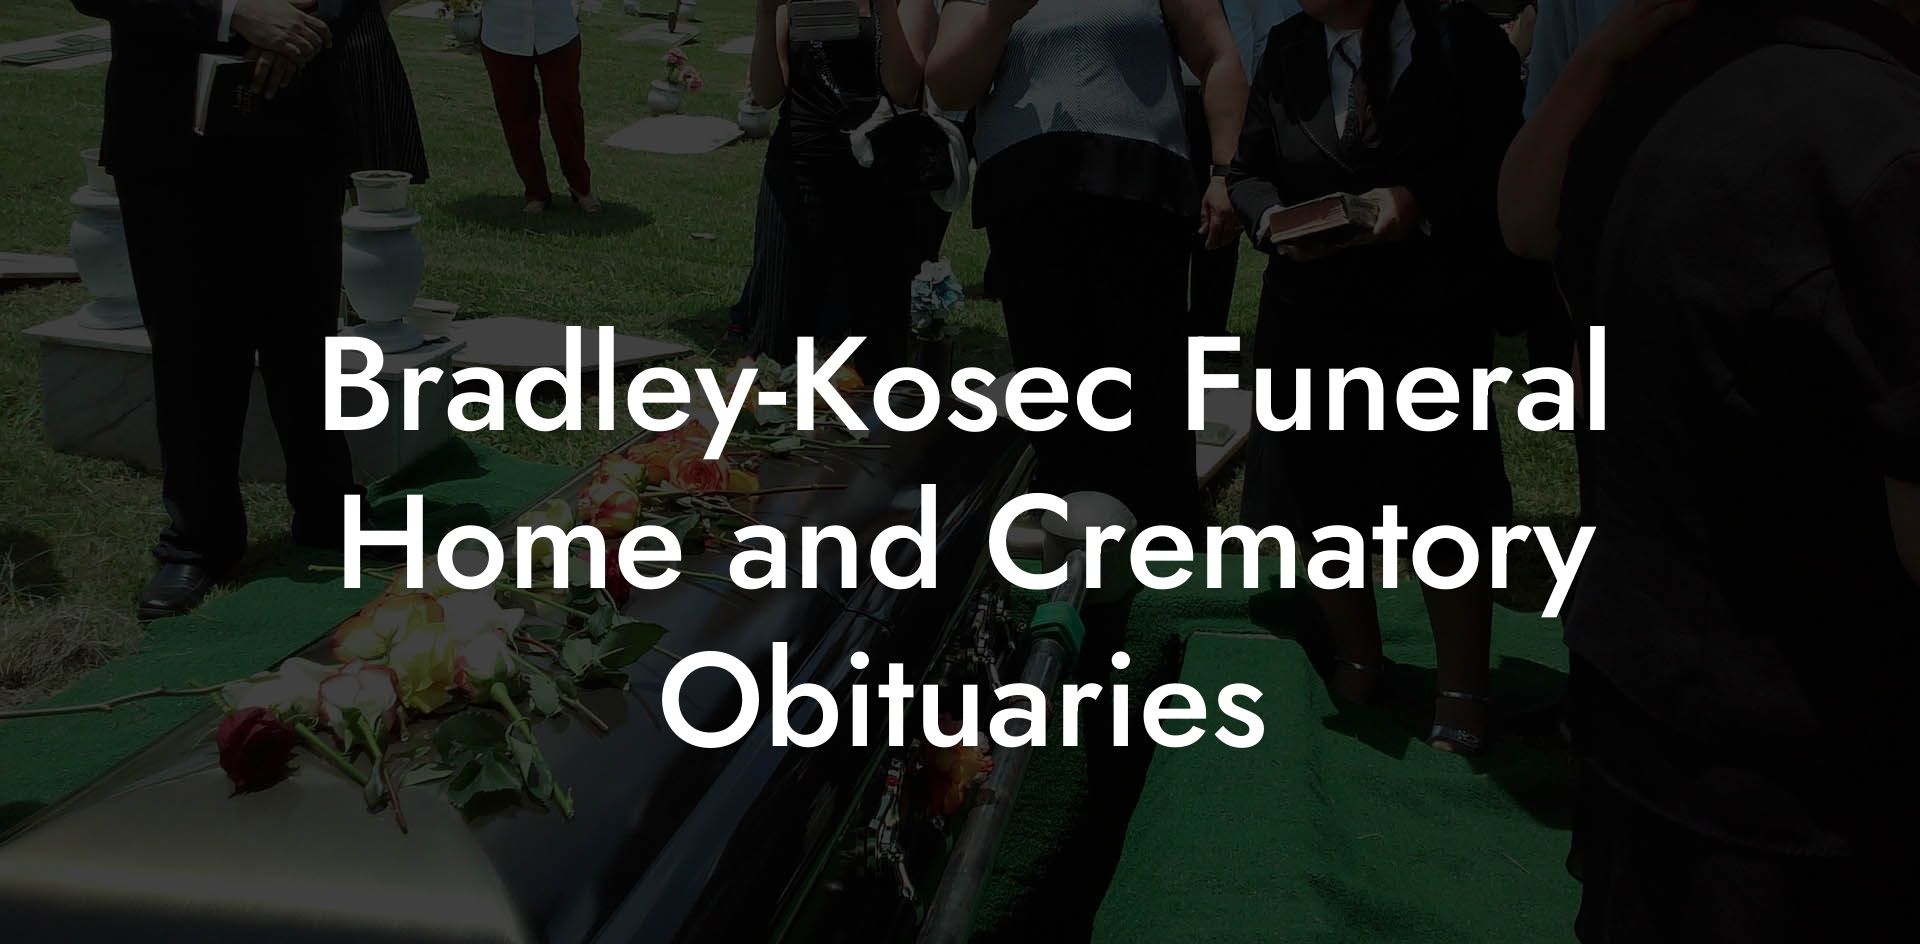 Bradley-Kosec Funeral Home and Crematory Obituaries